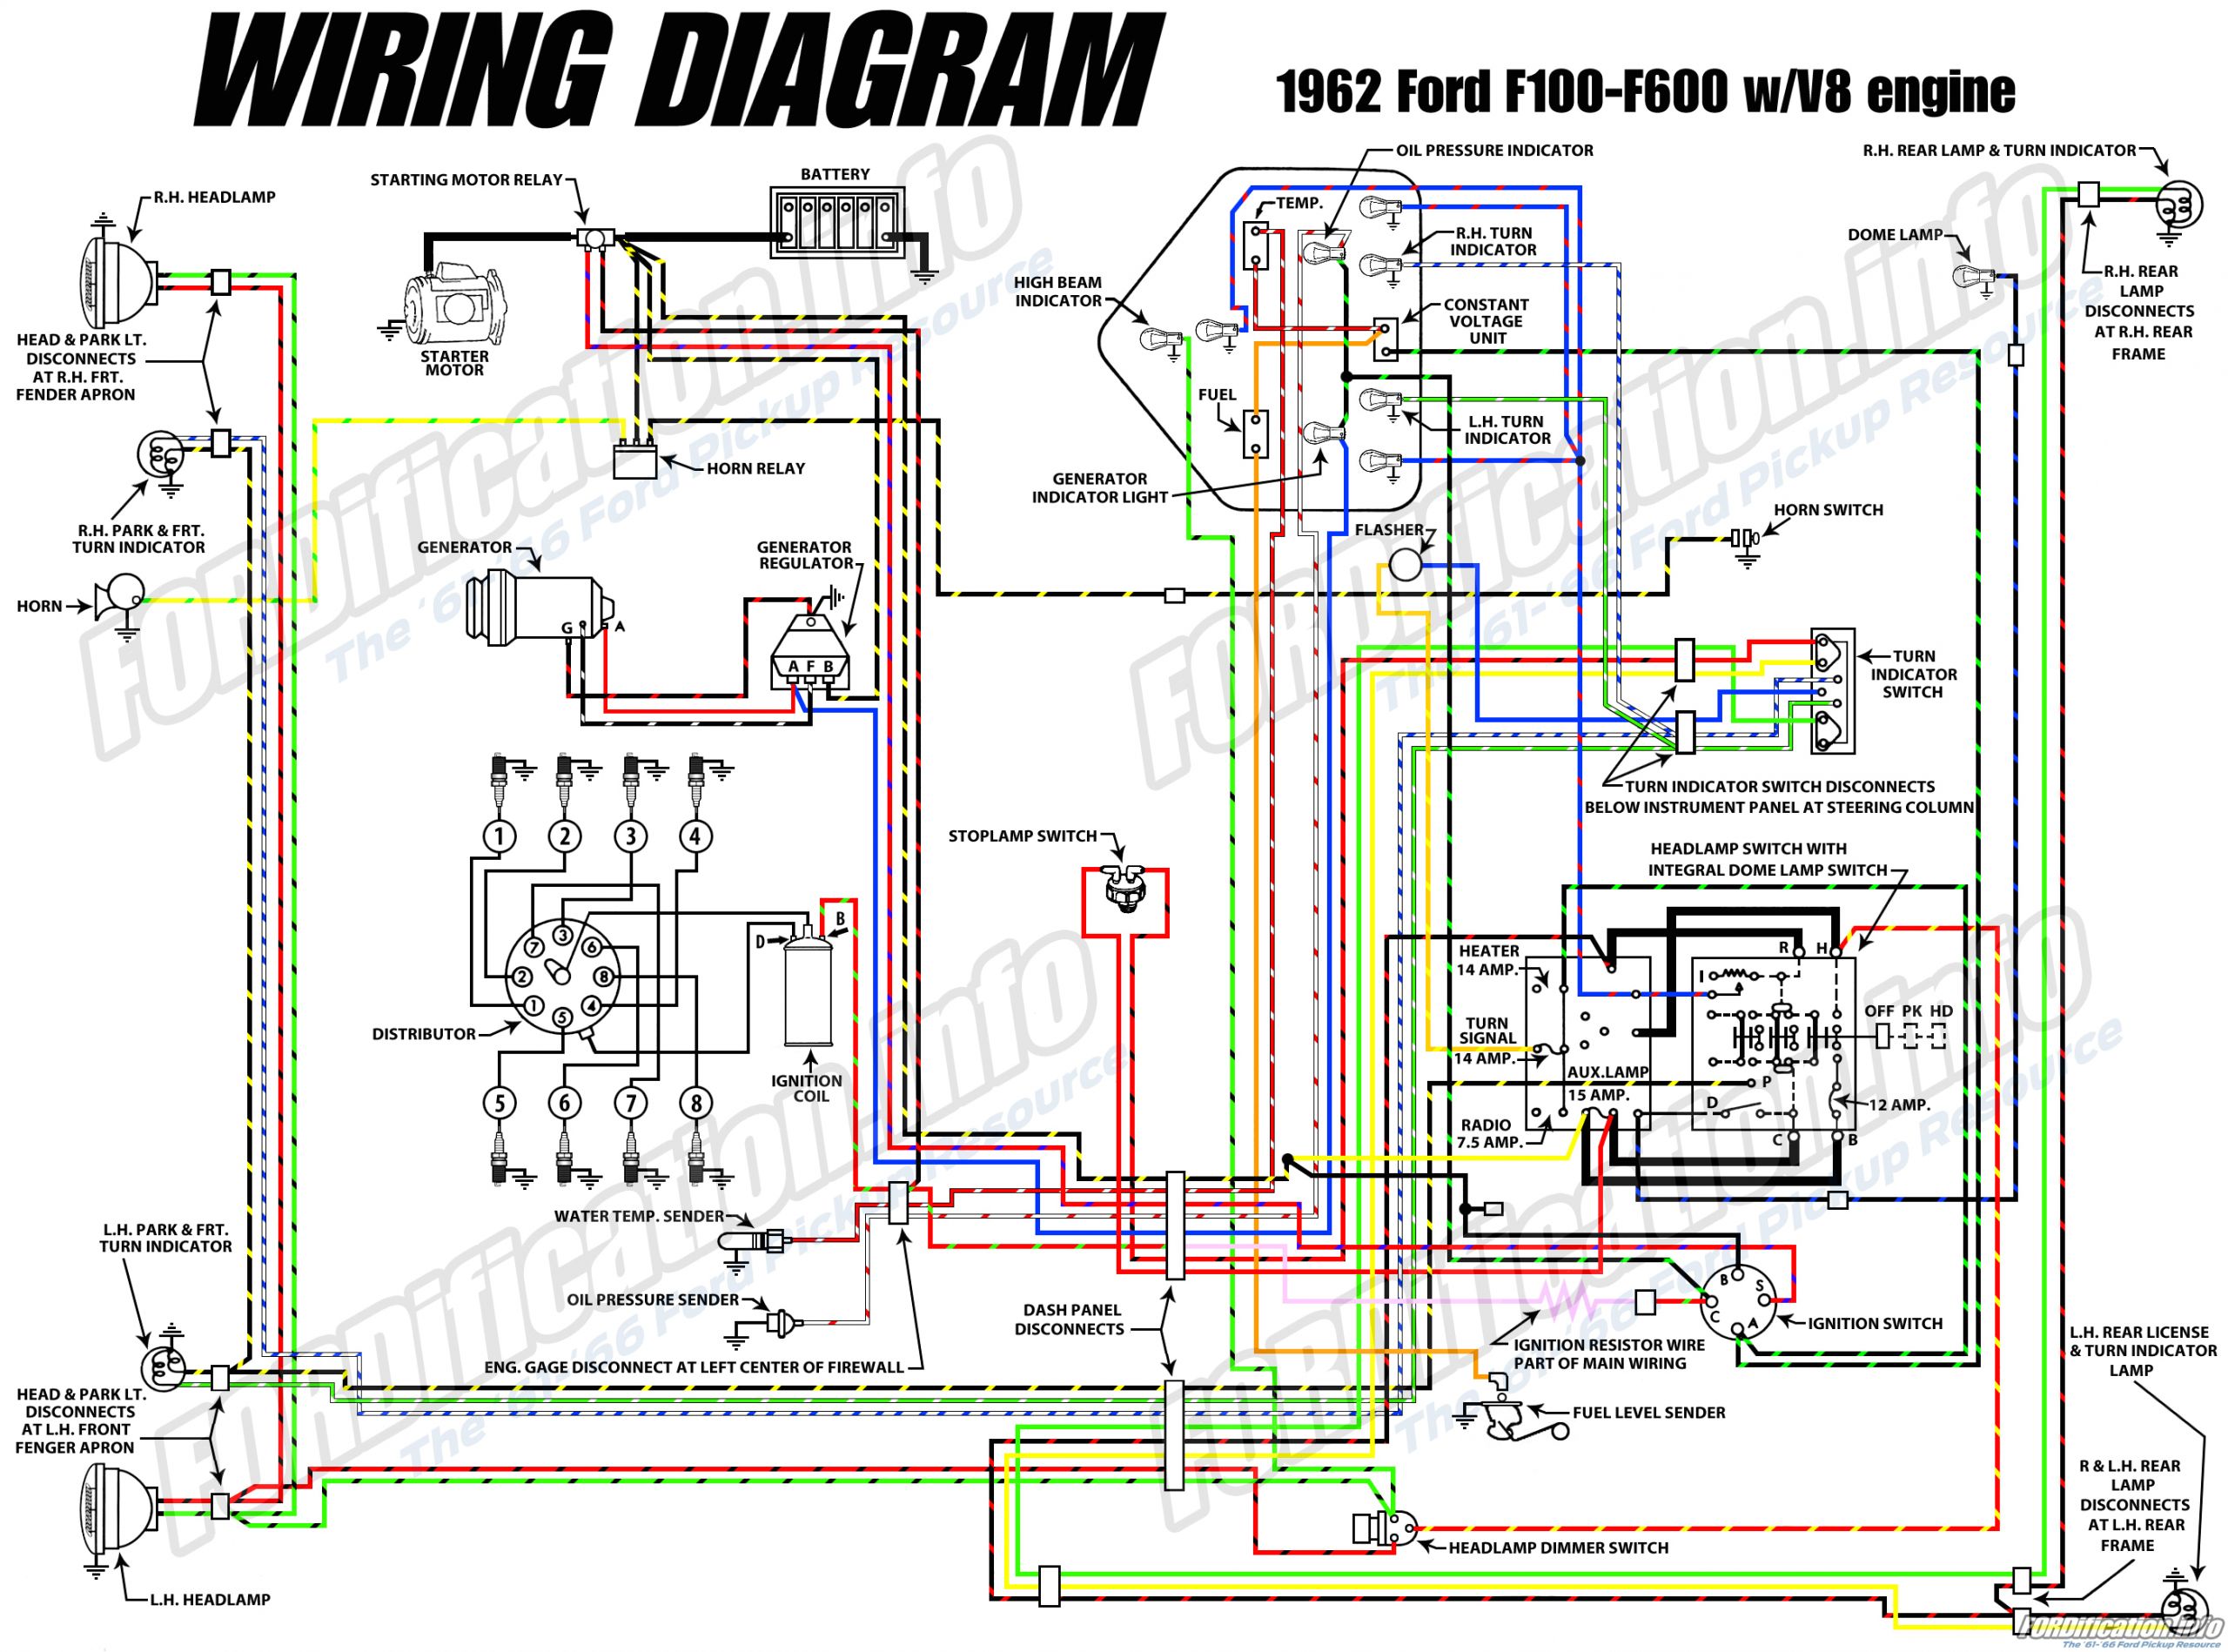 1962fordtruck masterwiring jpg